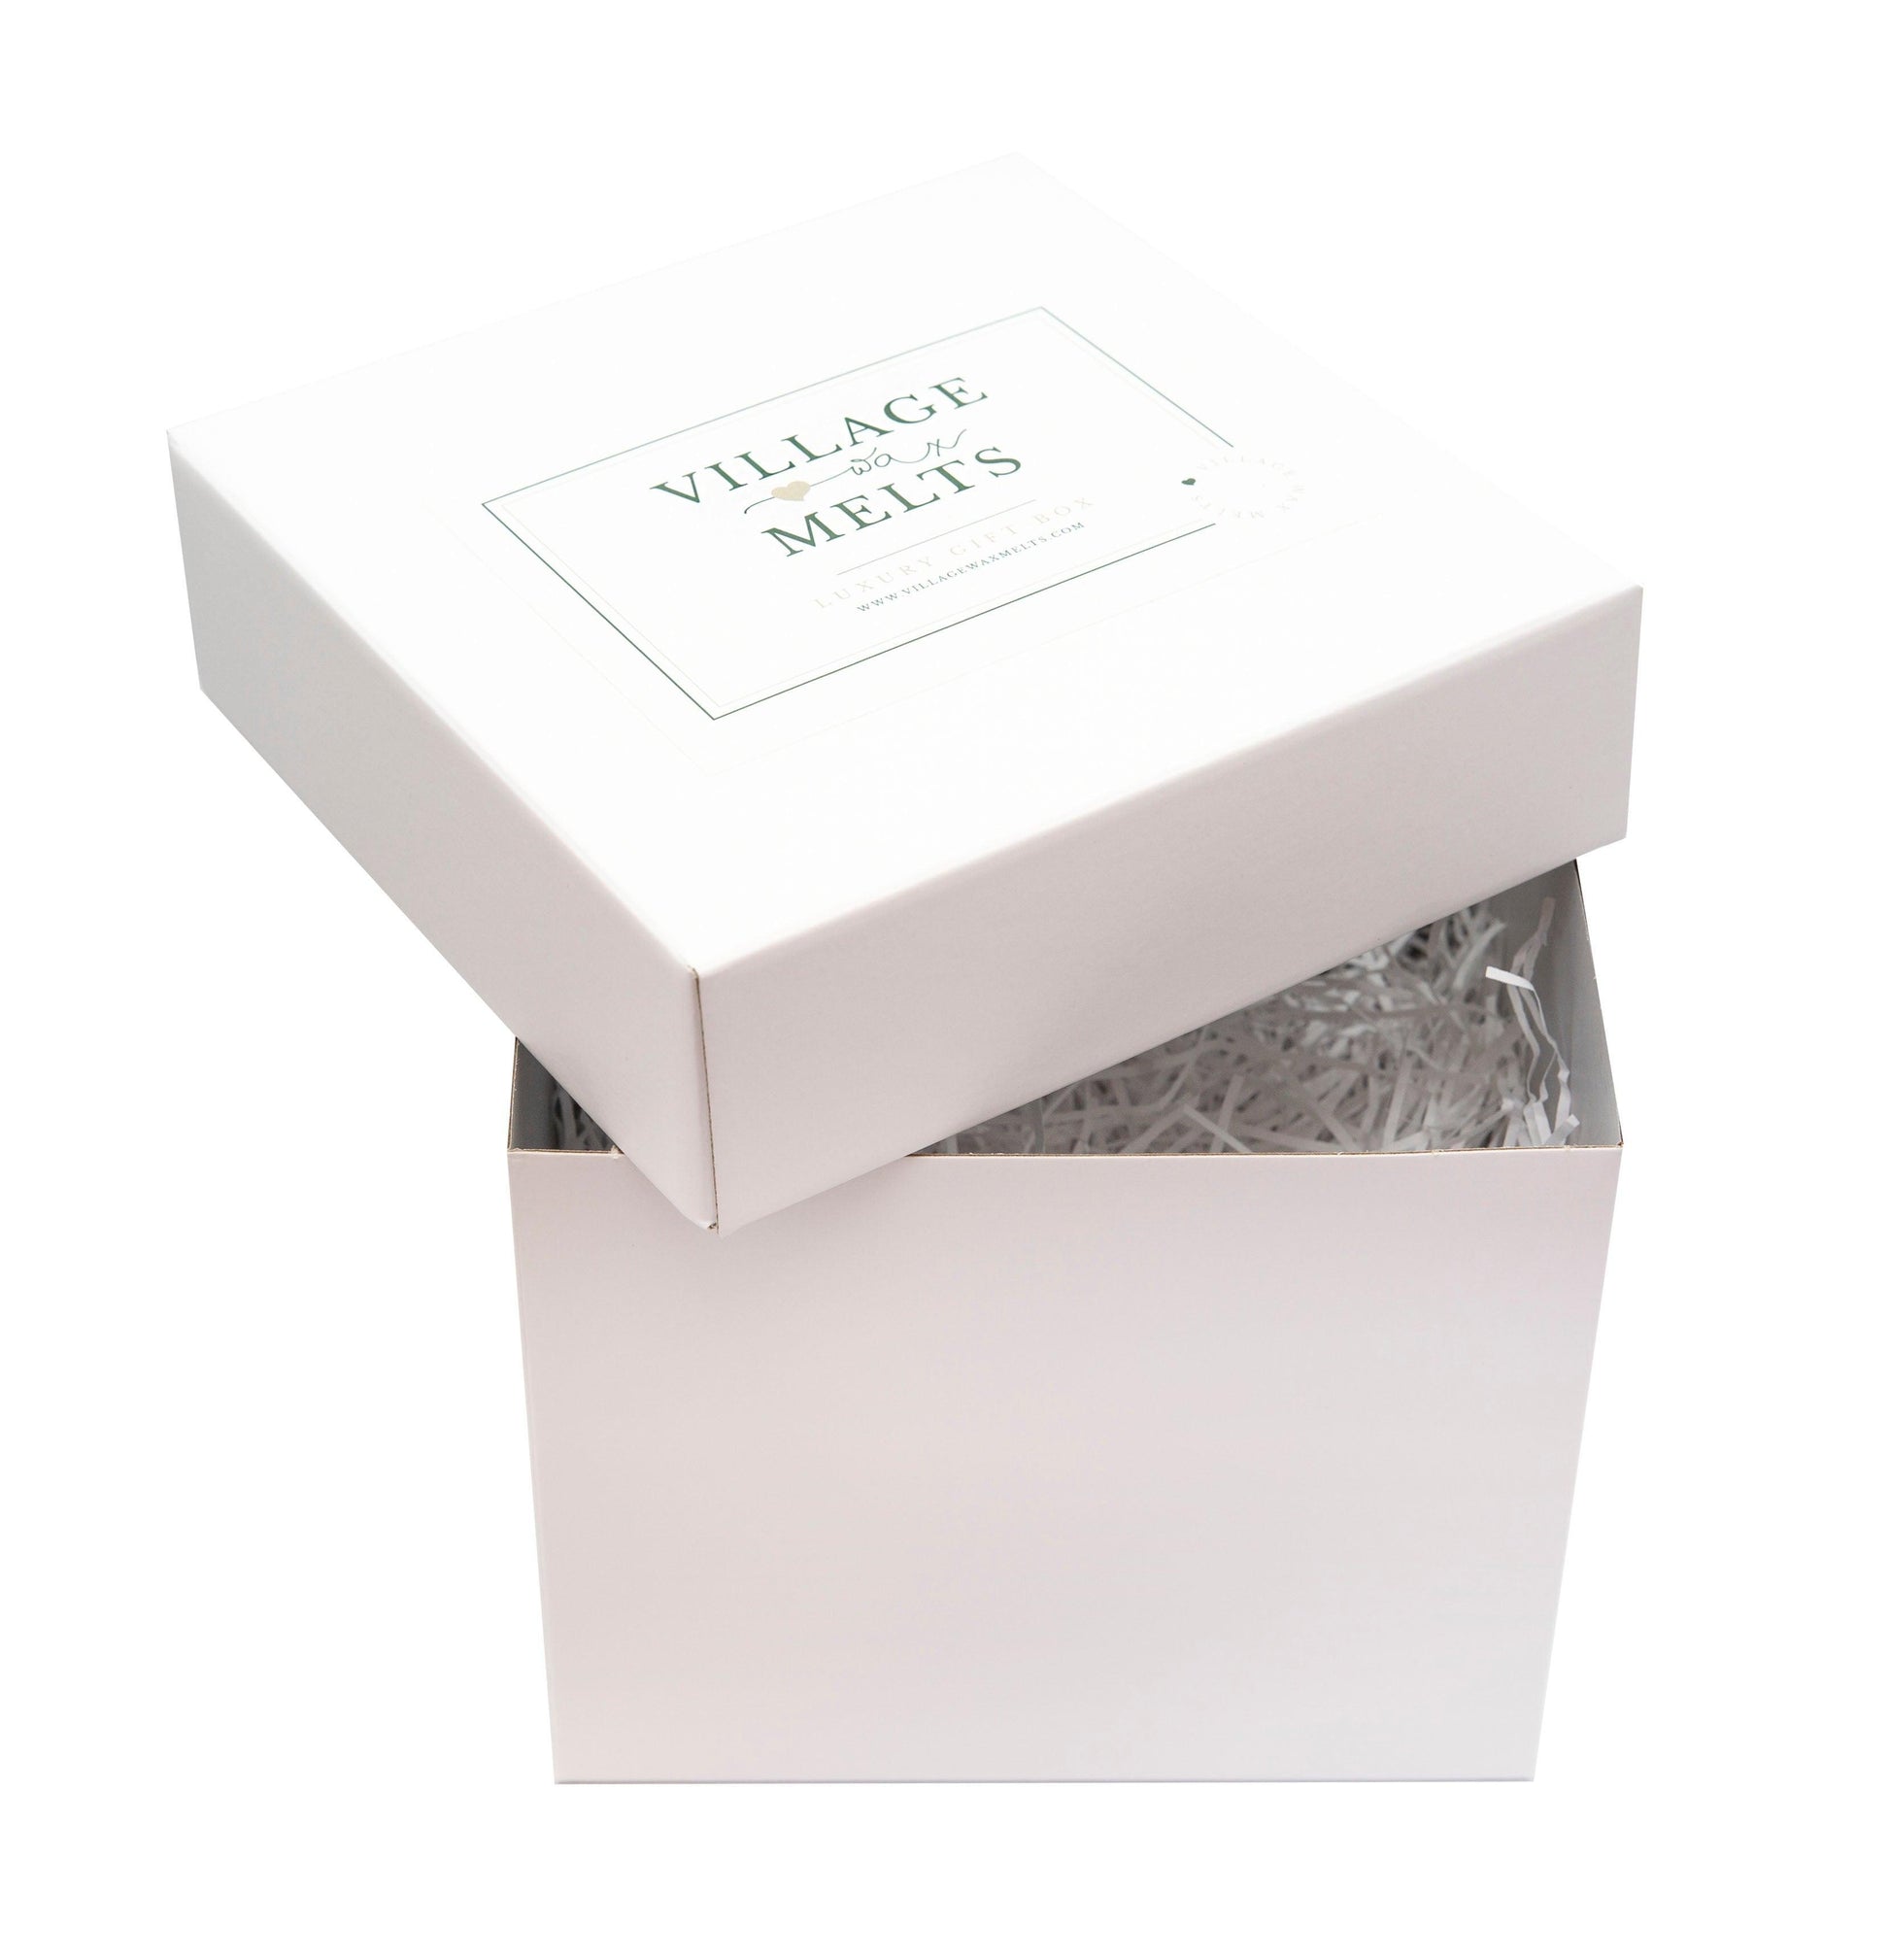 Home Wax Burner Gift Set (Grey) - Village Wax Melts